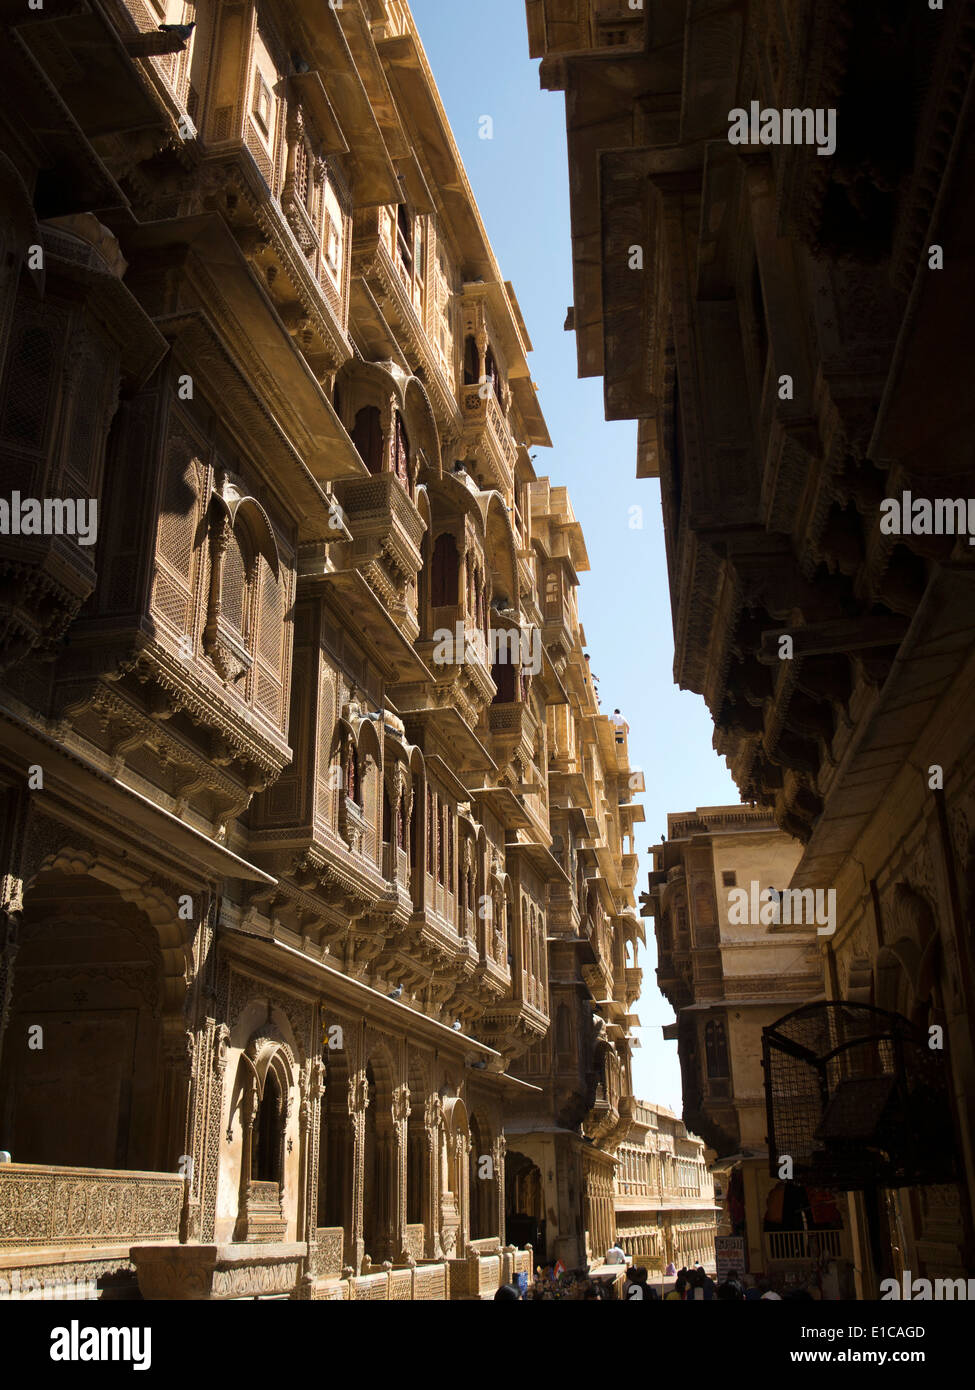 India, Rajasthan, Jaisalmer, Patwon Ki Haveli, ornately decorated historic former merchant’s house Stock Photo